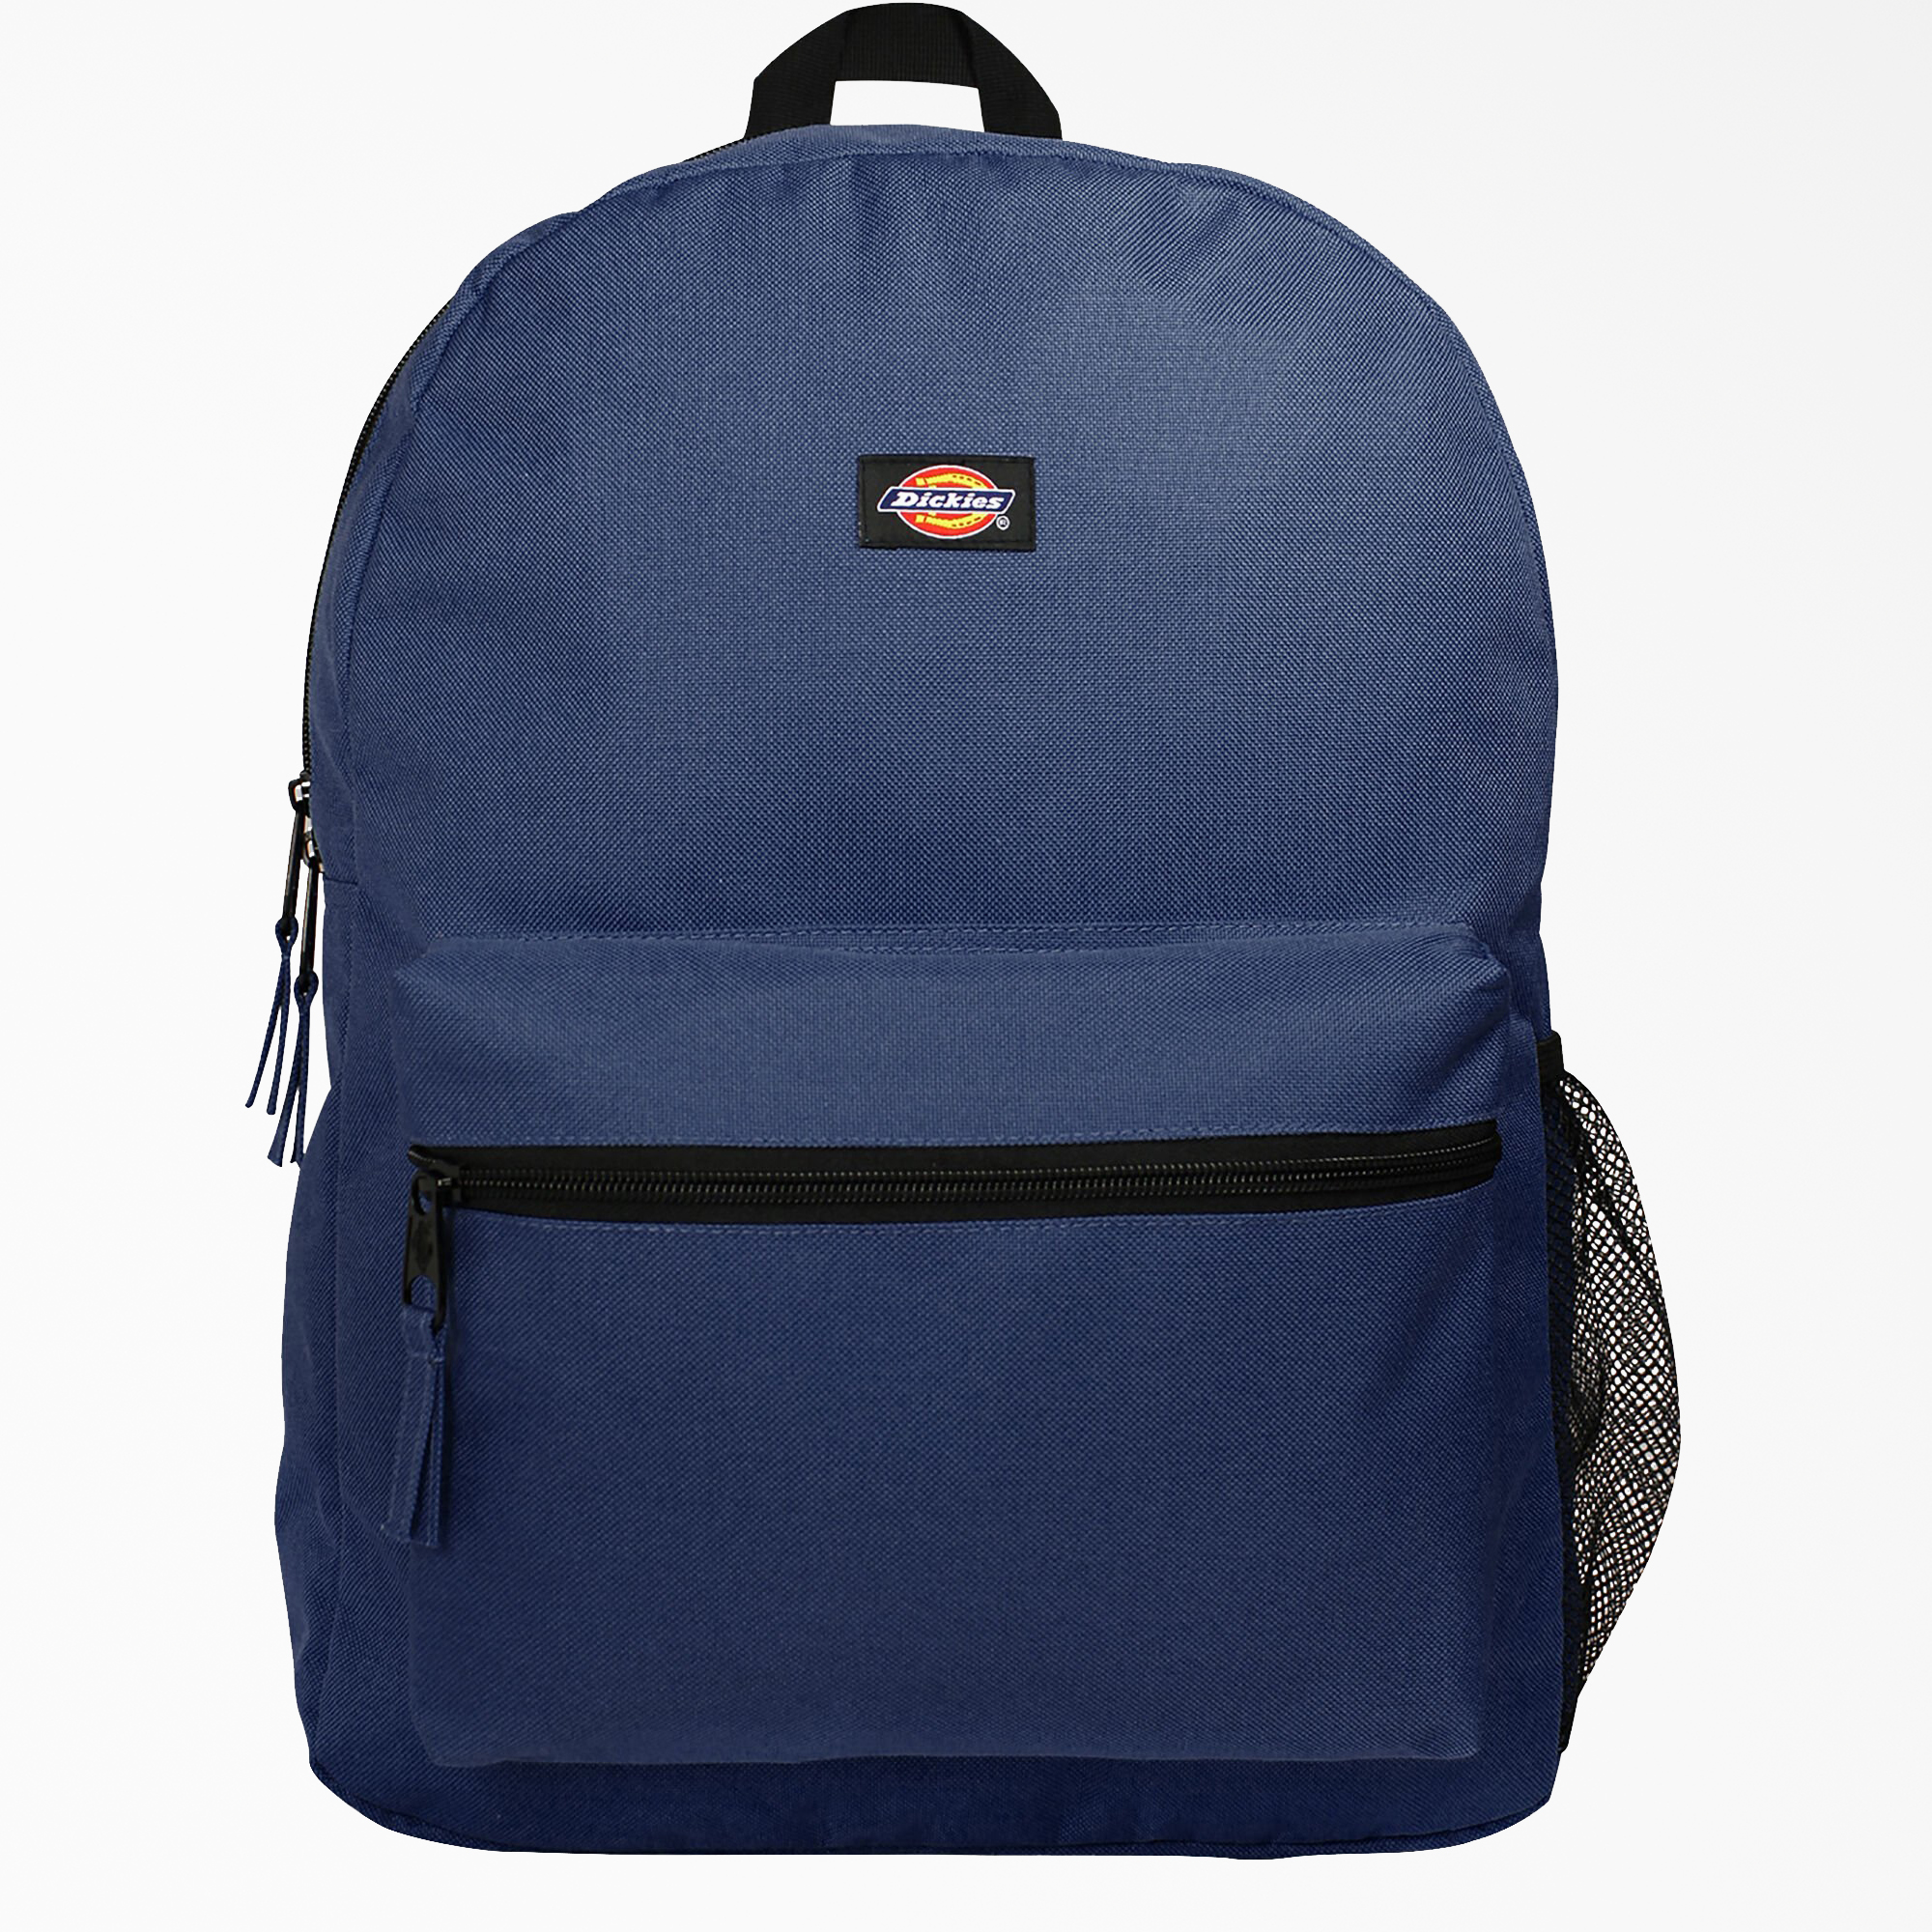 Student Backpack - Navy Blue (NV)